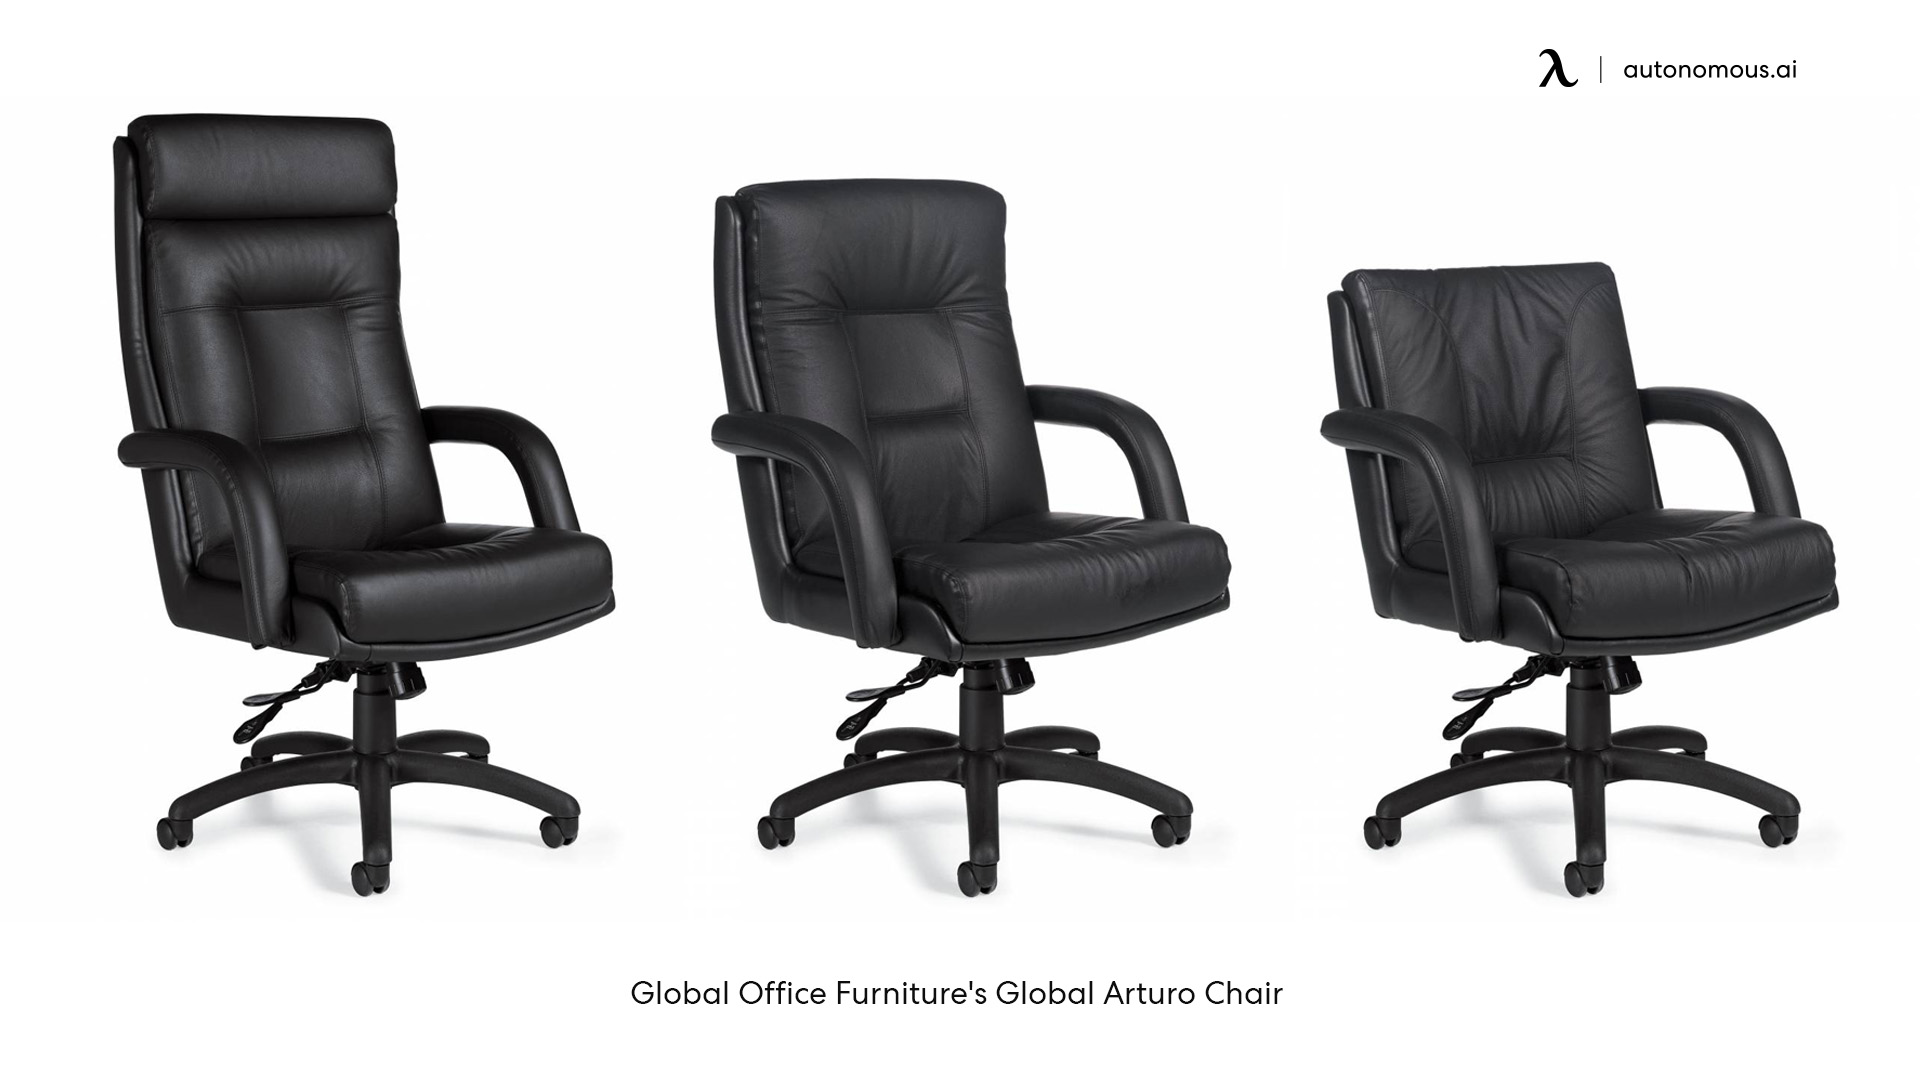 Global Office Furniture's Global Arturo Chair